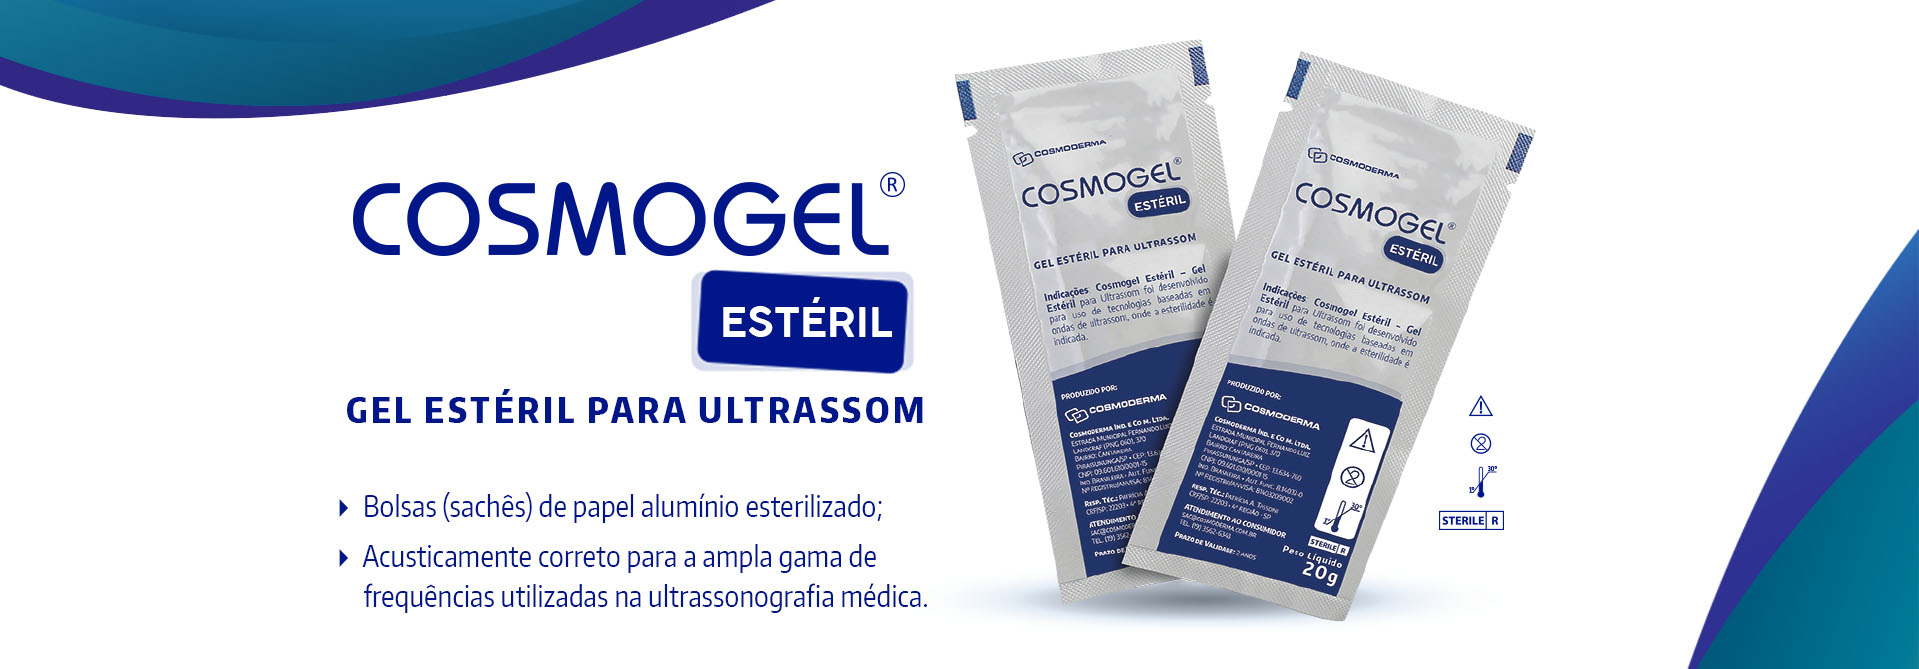 Cosmogel Esteril – BR